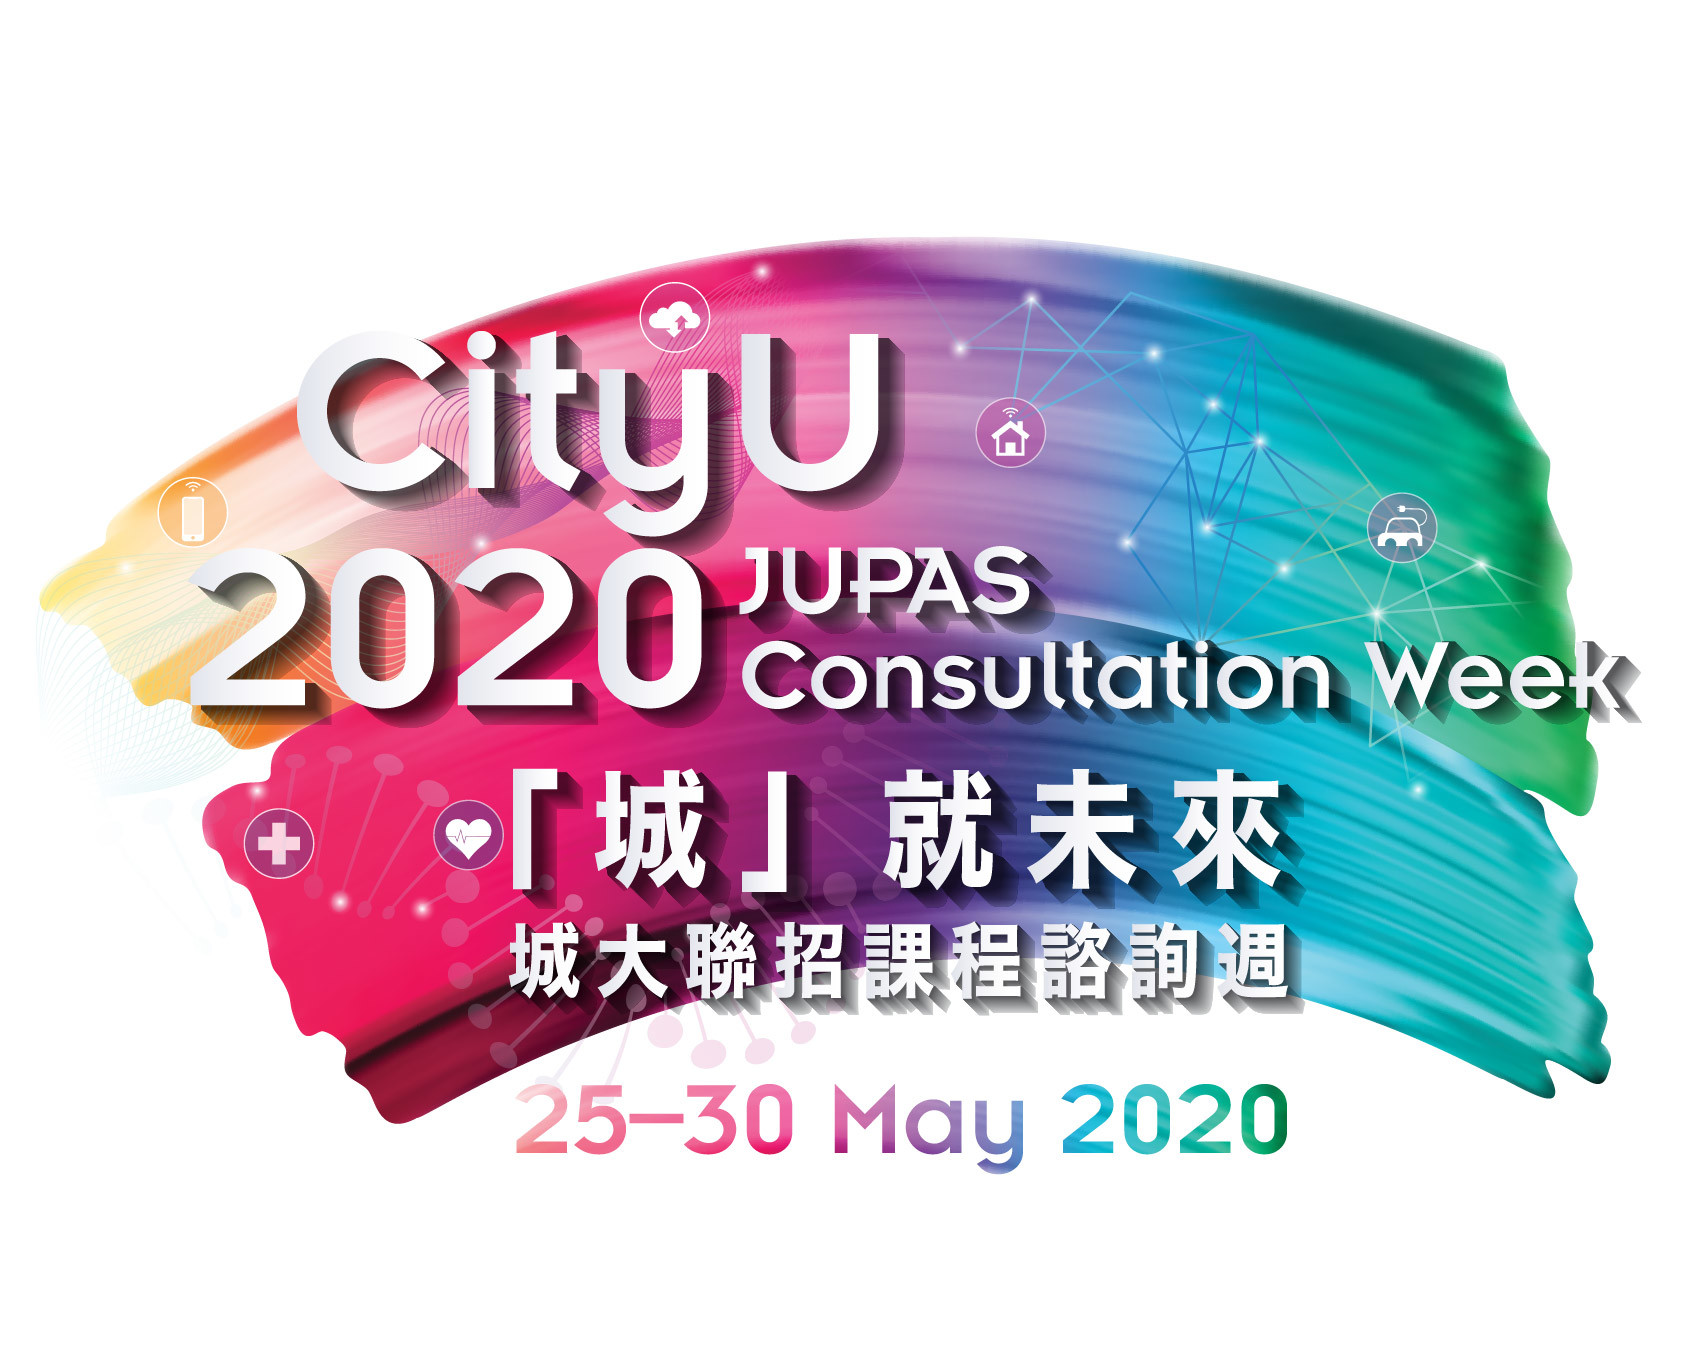 CityU JUPAS Consultation Week 2020